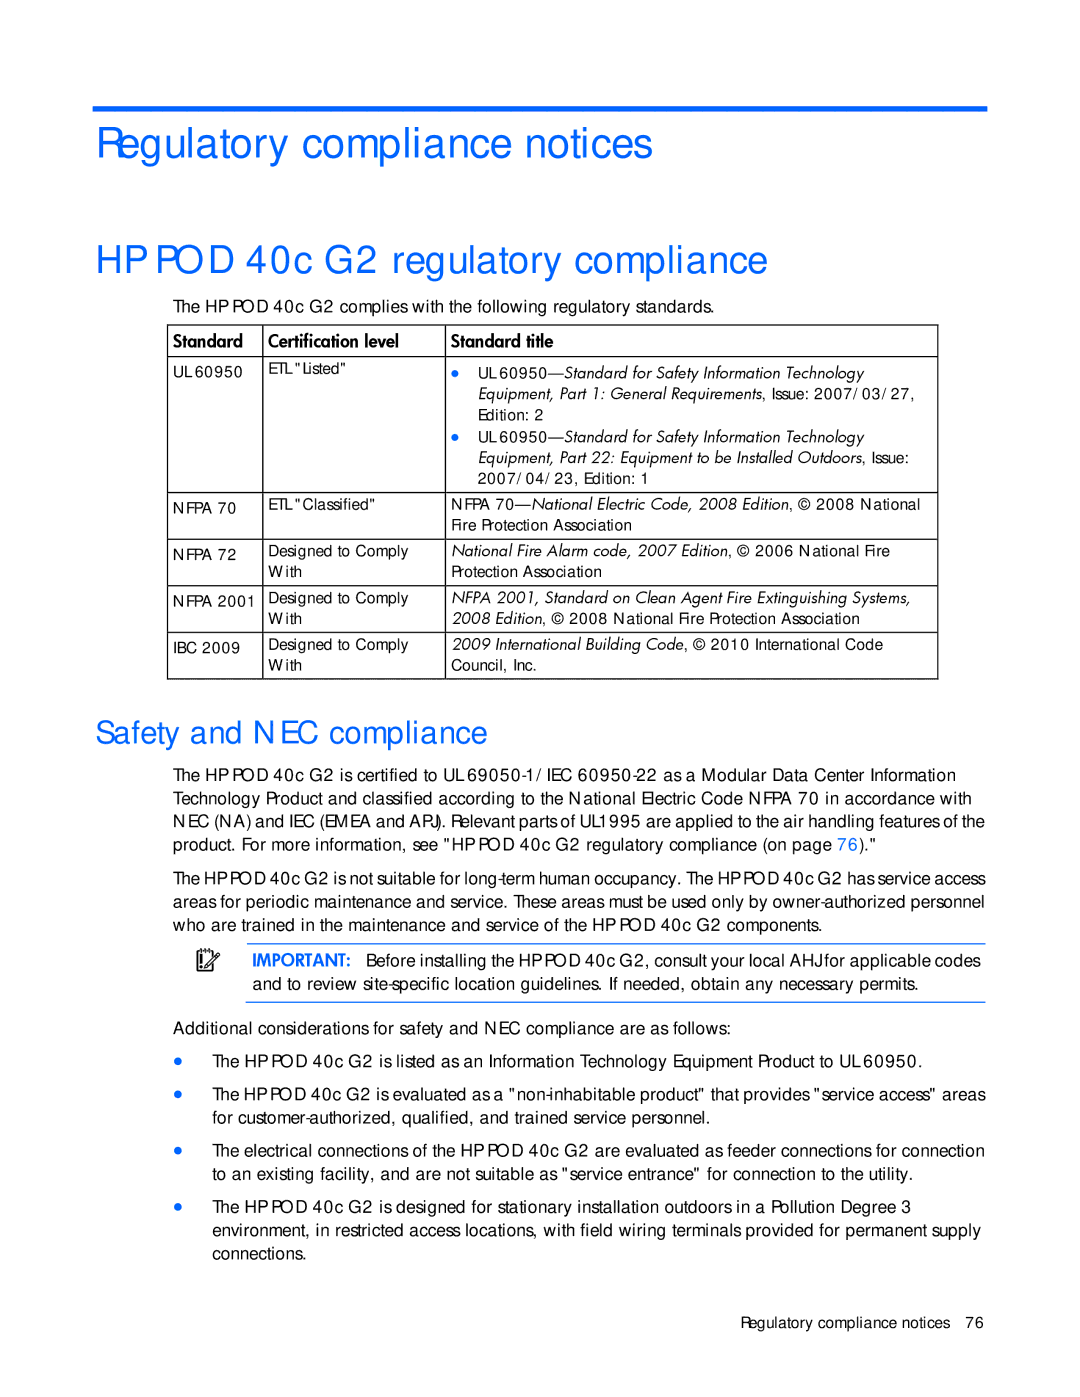 HP Performance Optimized Data Center (POD) 40c manual Regulatory compliance notices, HP POD 40c G2 regulatory compliance 